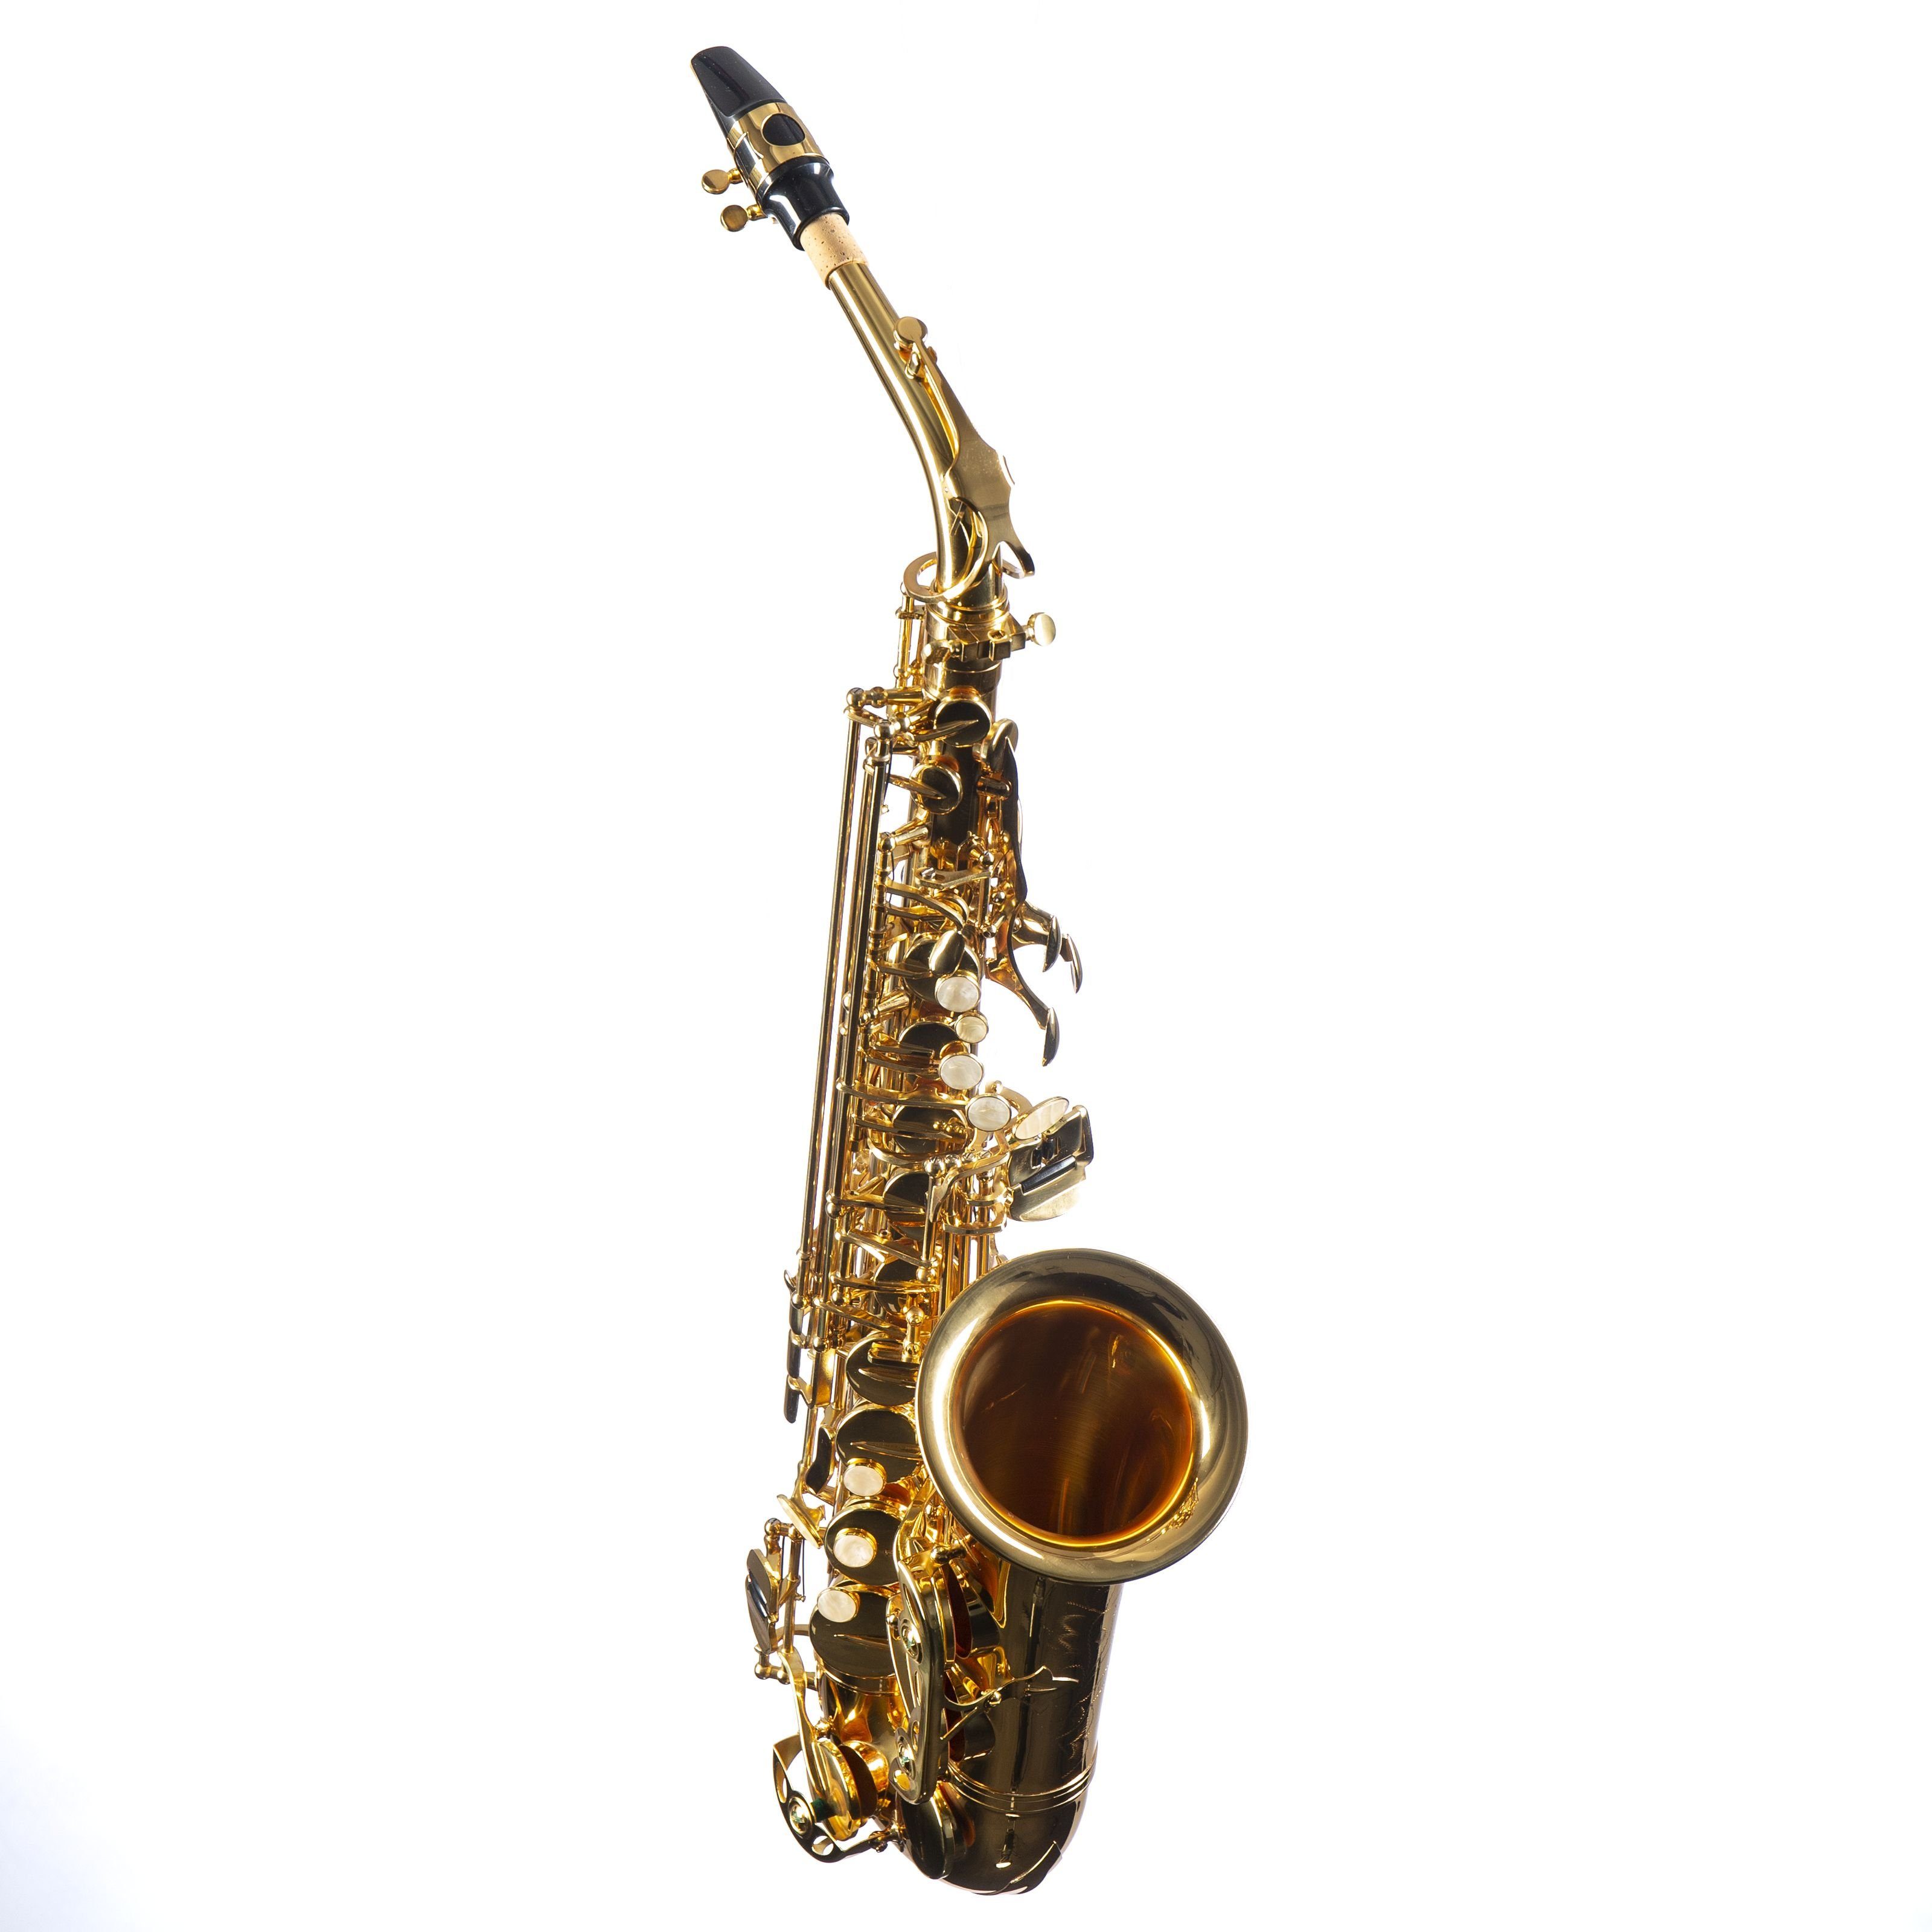 Monzani Saxophon, MZAS-90L Alt Saxophon online kaufen | OTTO